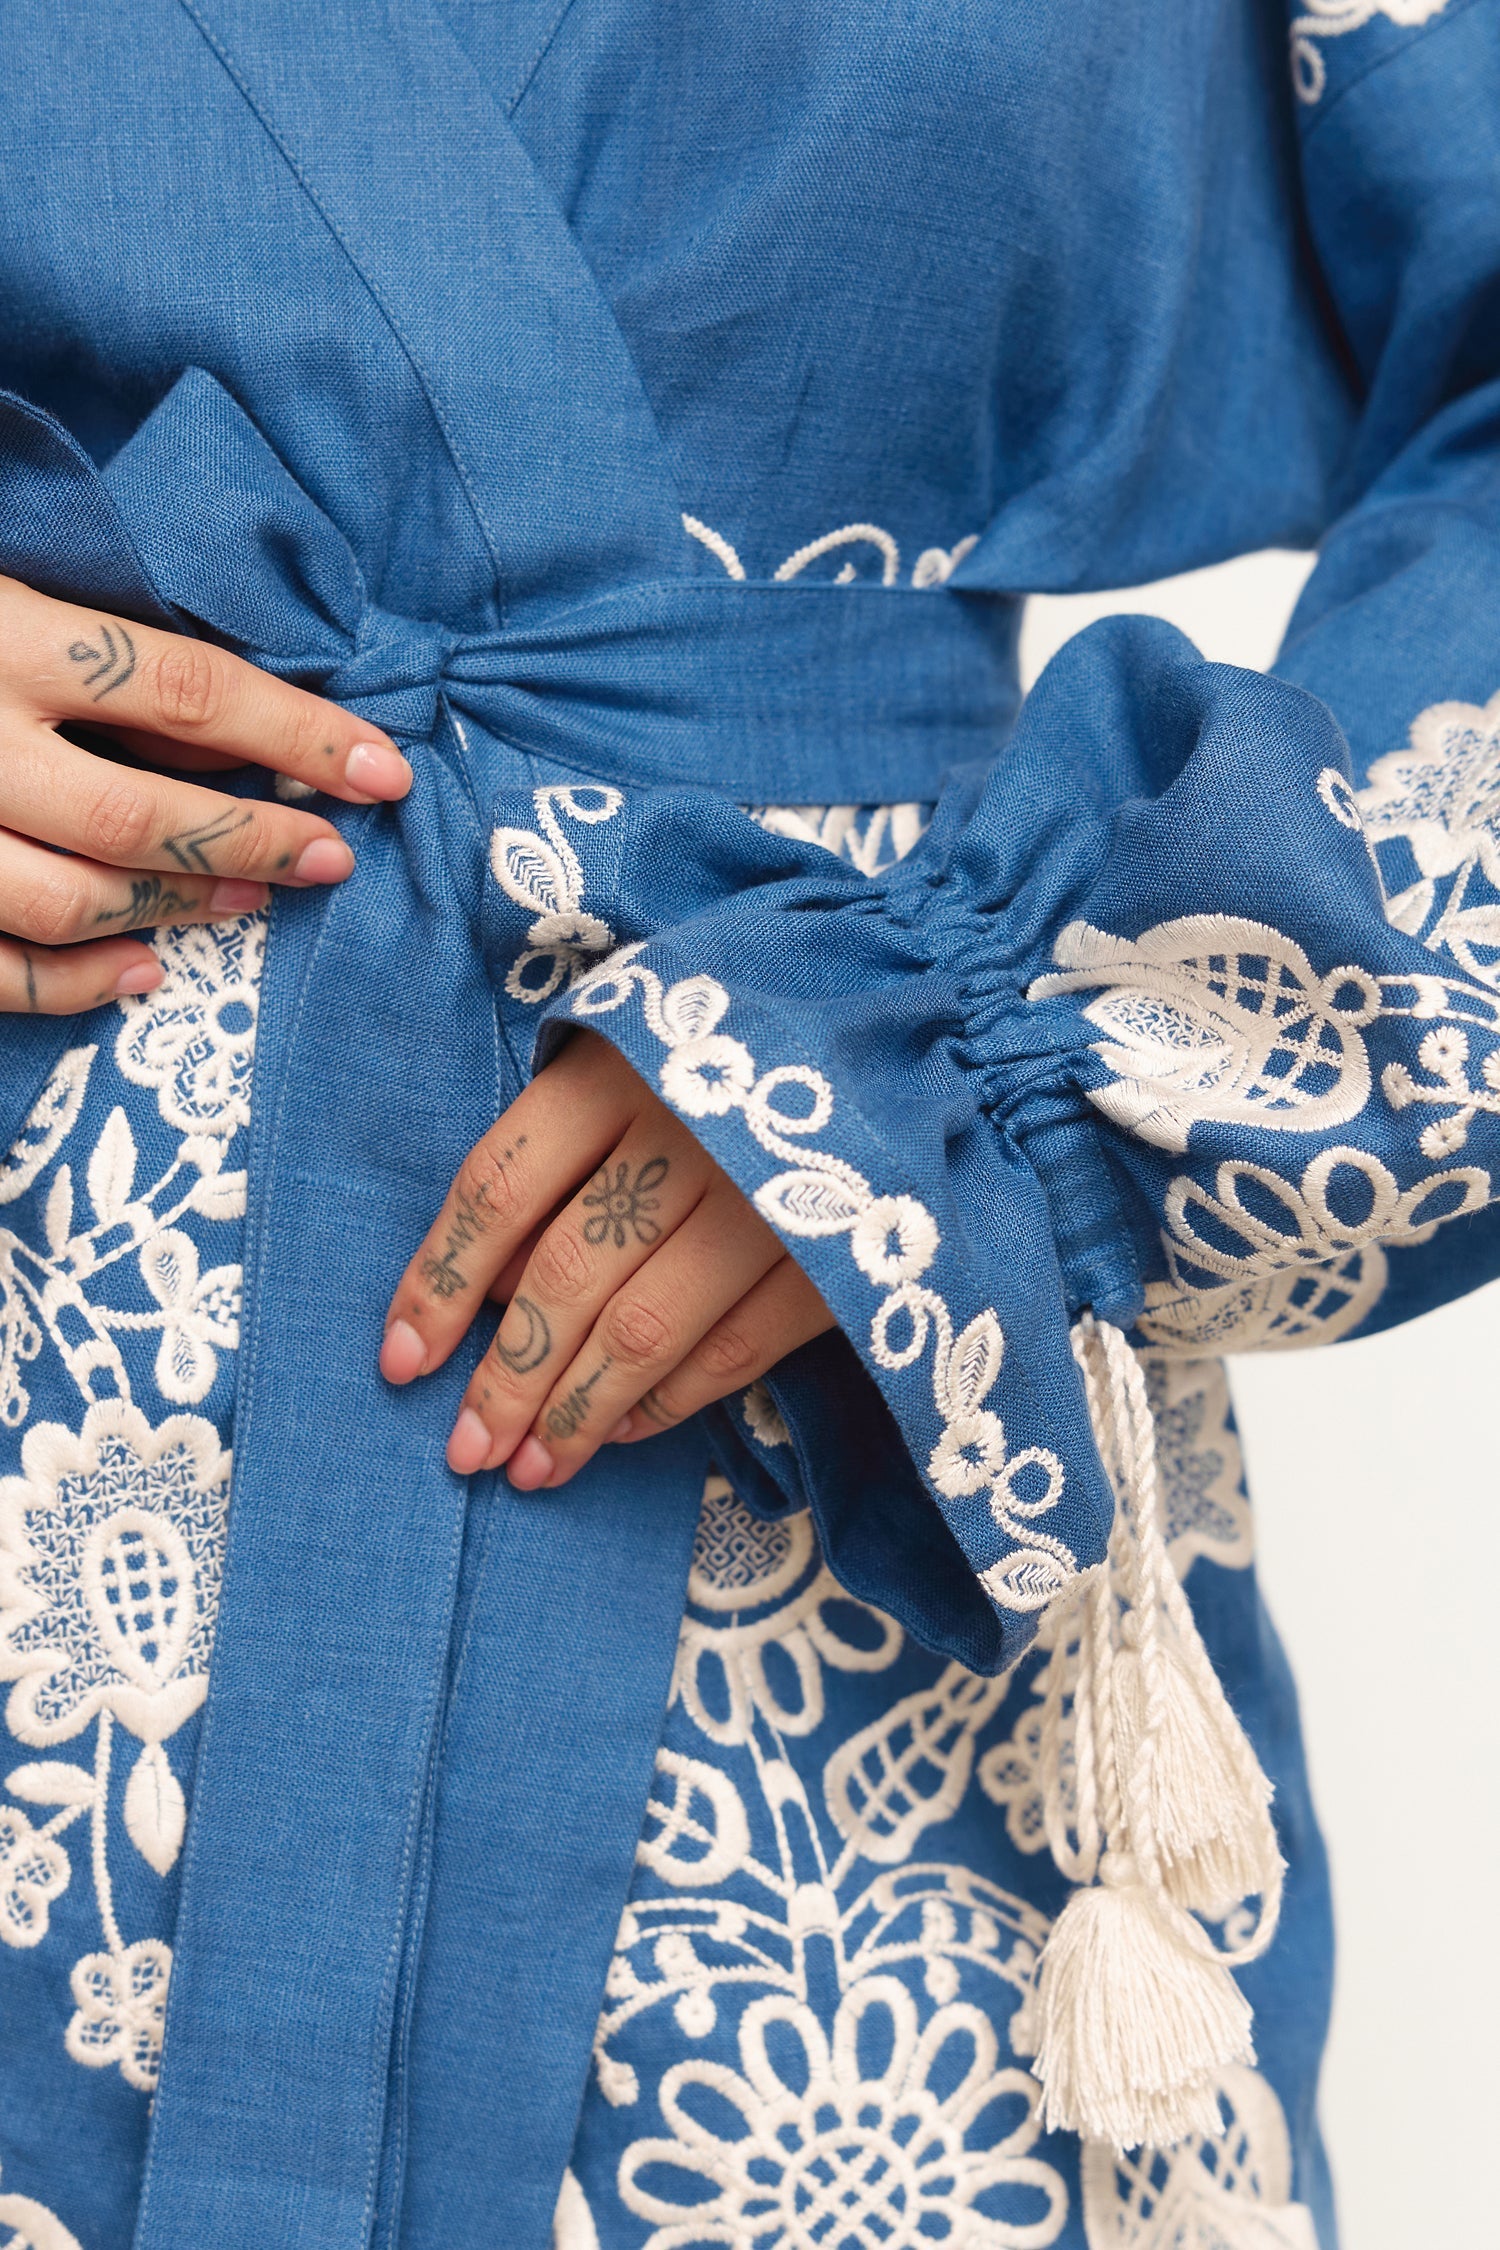 Annabo "Bijou Blossom" Tunic Kimono Steel Blue